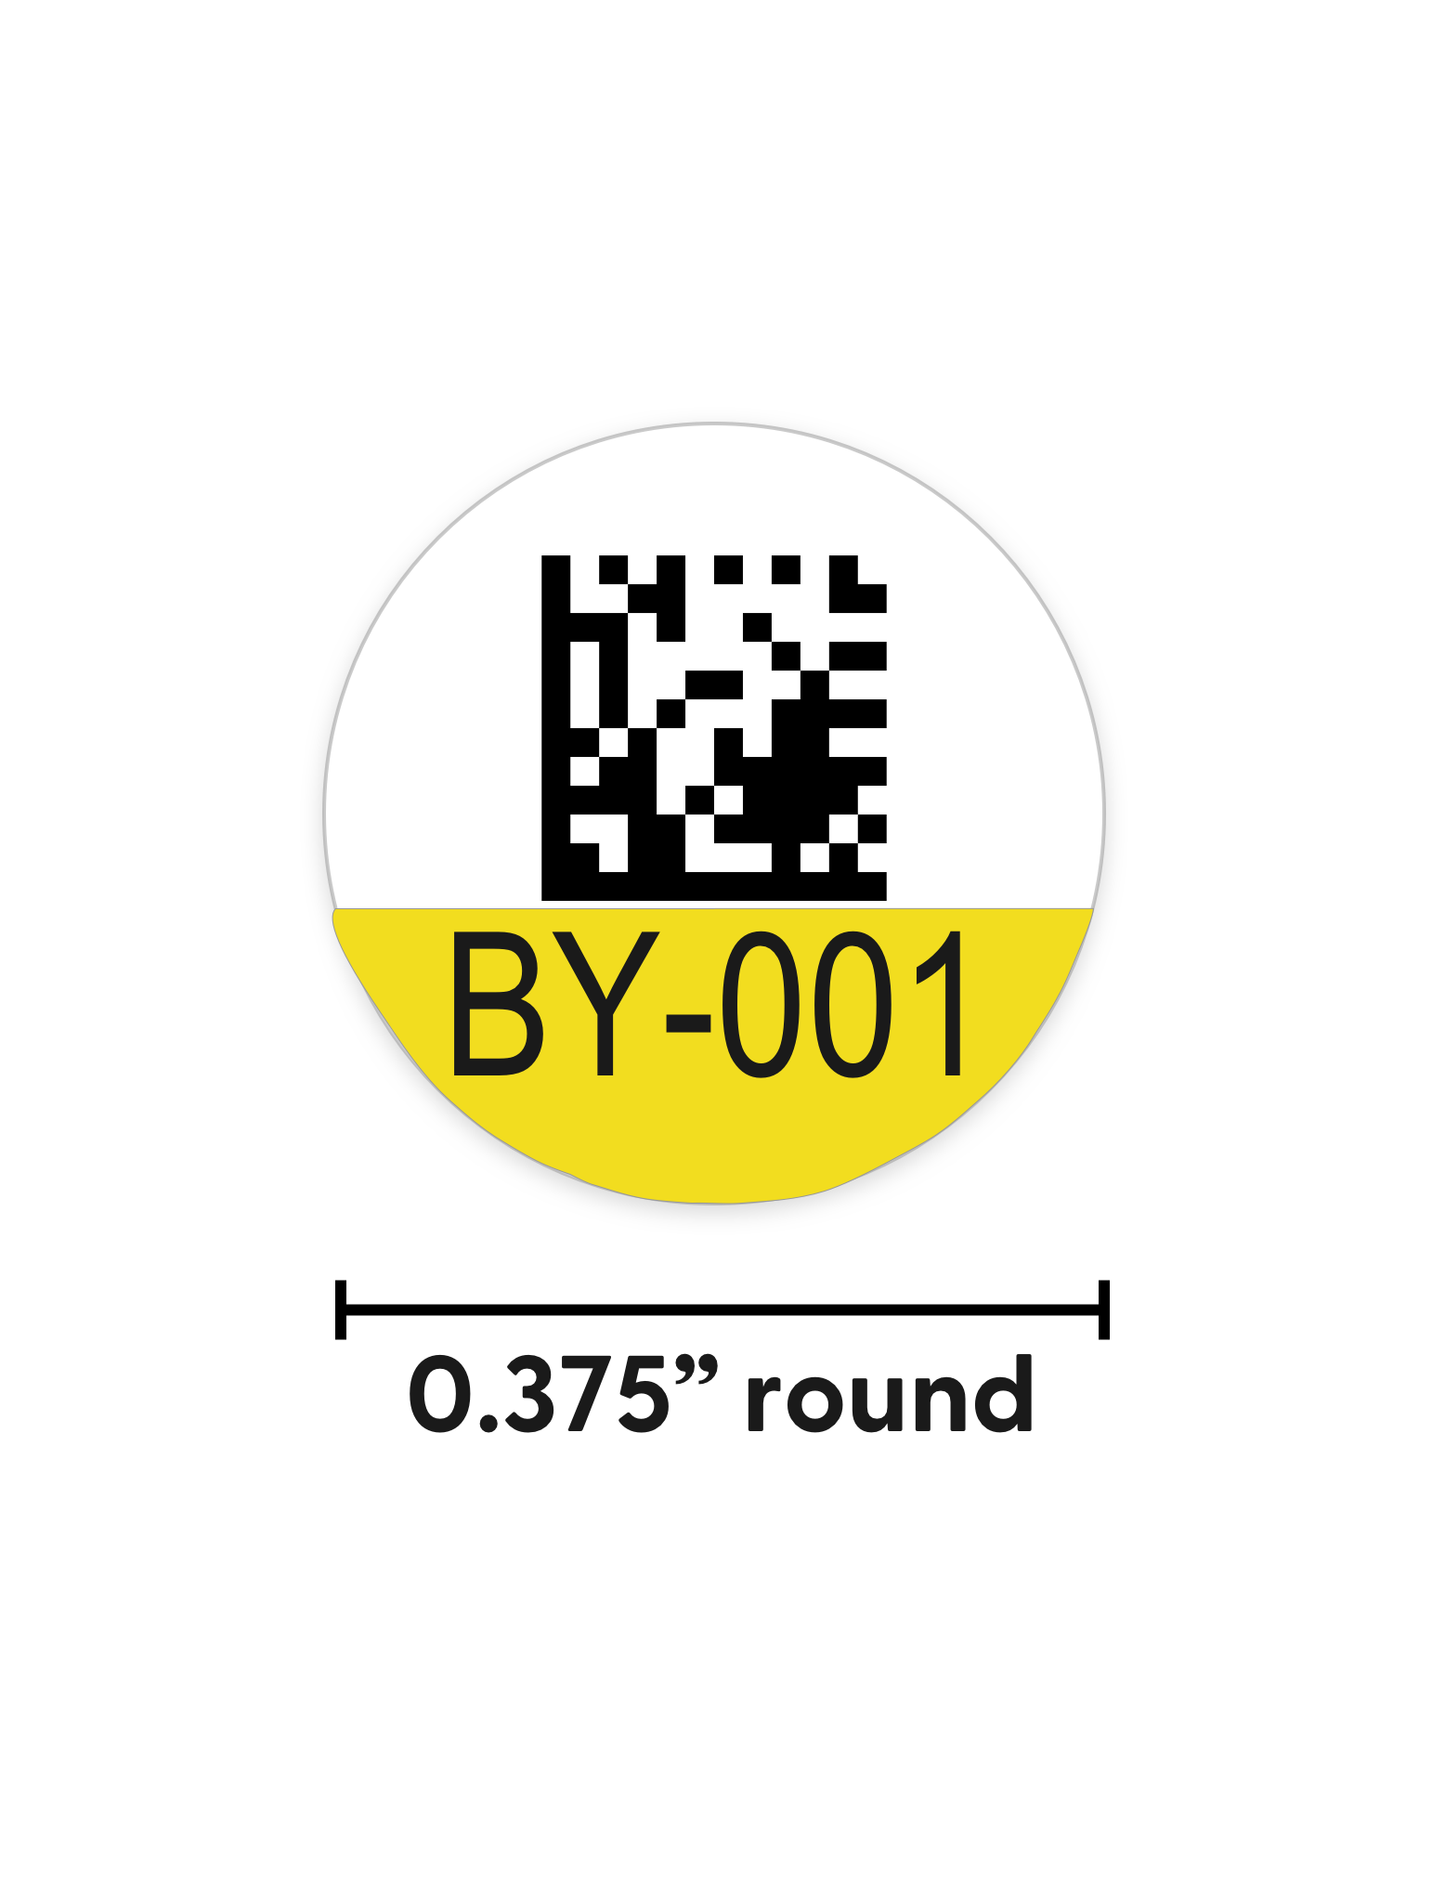 4 x 30 Dot labels for bulk items